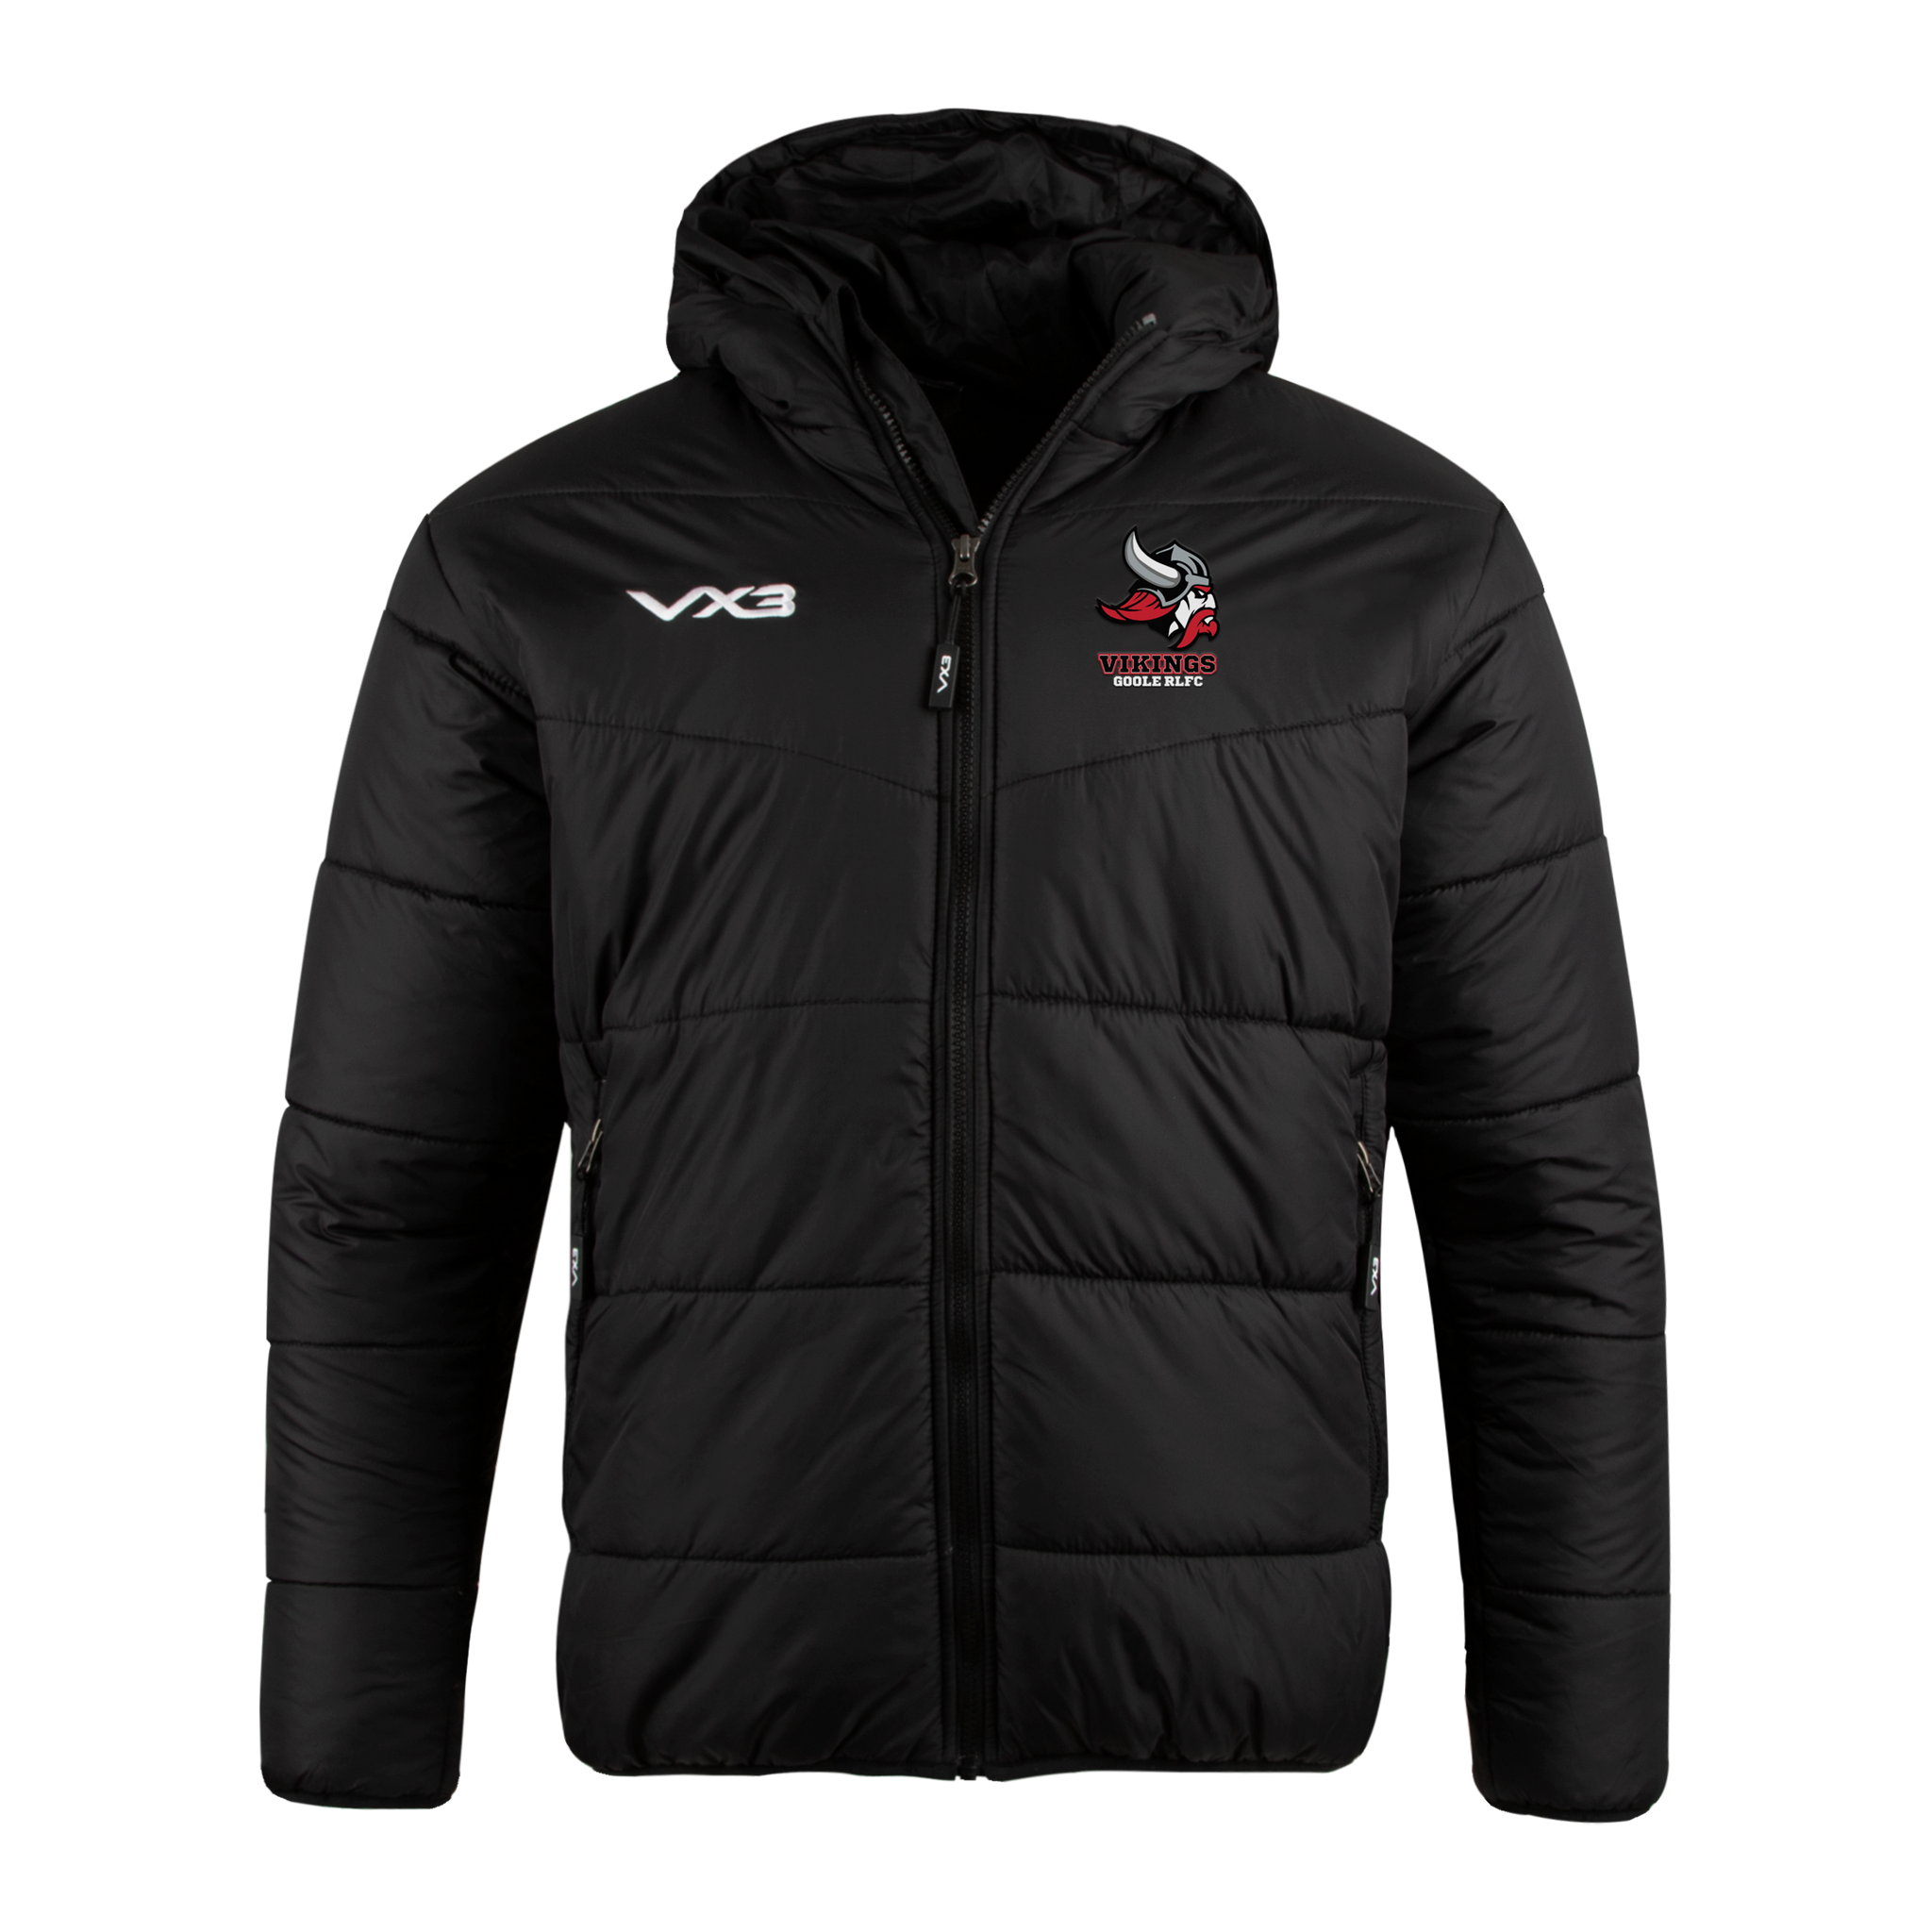 Goole Viking ARLFC Lorica Quilted Jacket